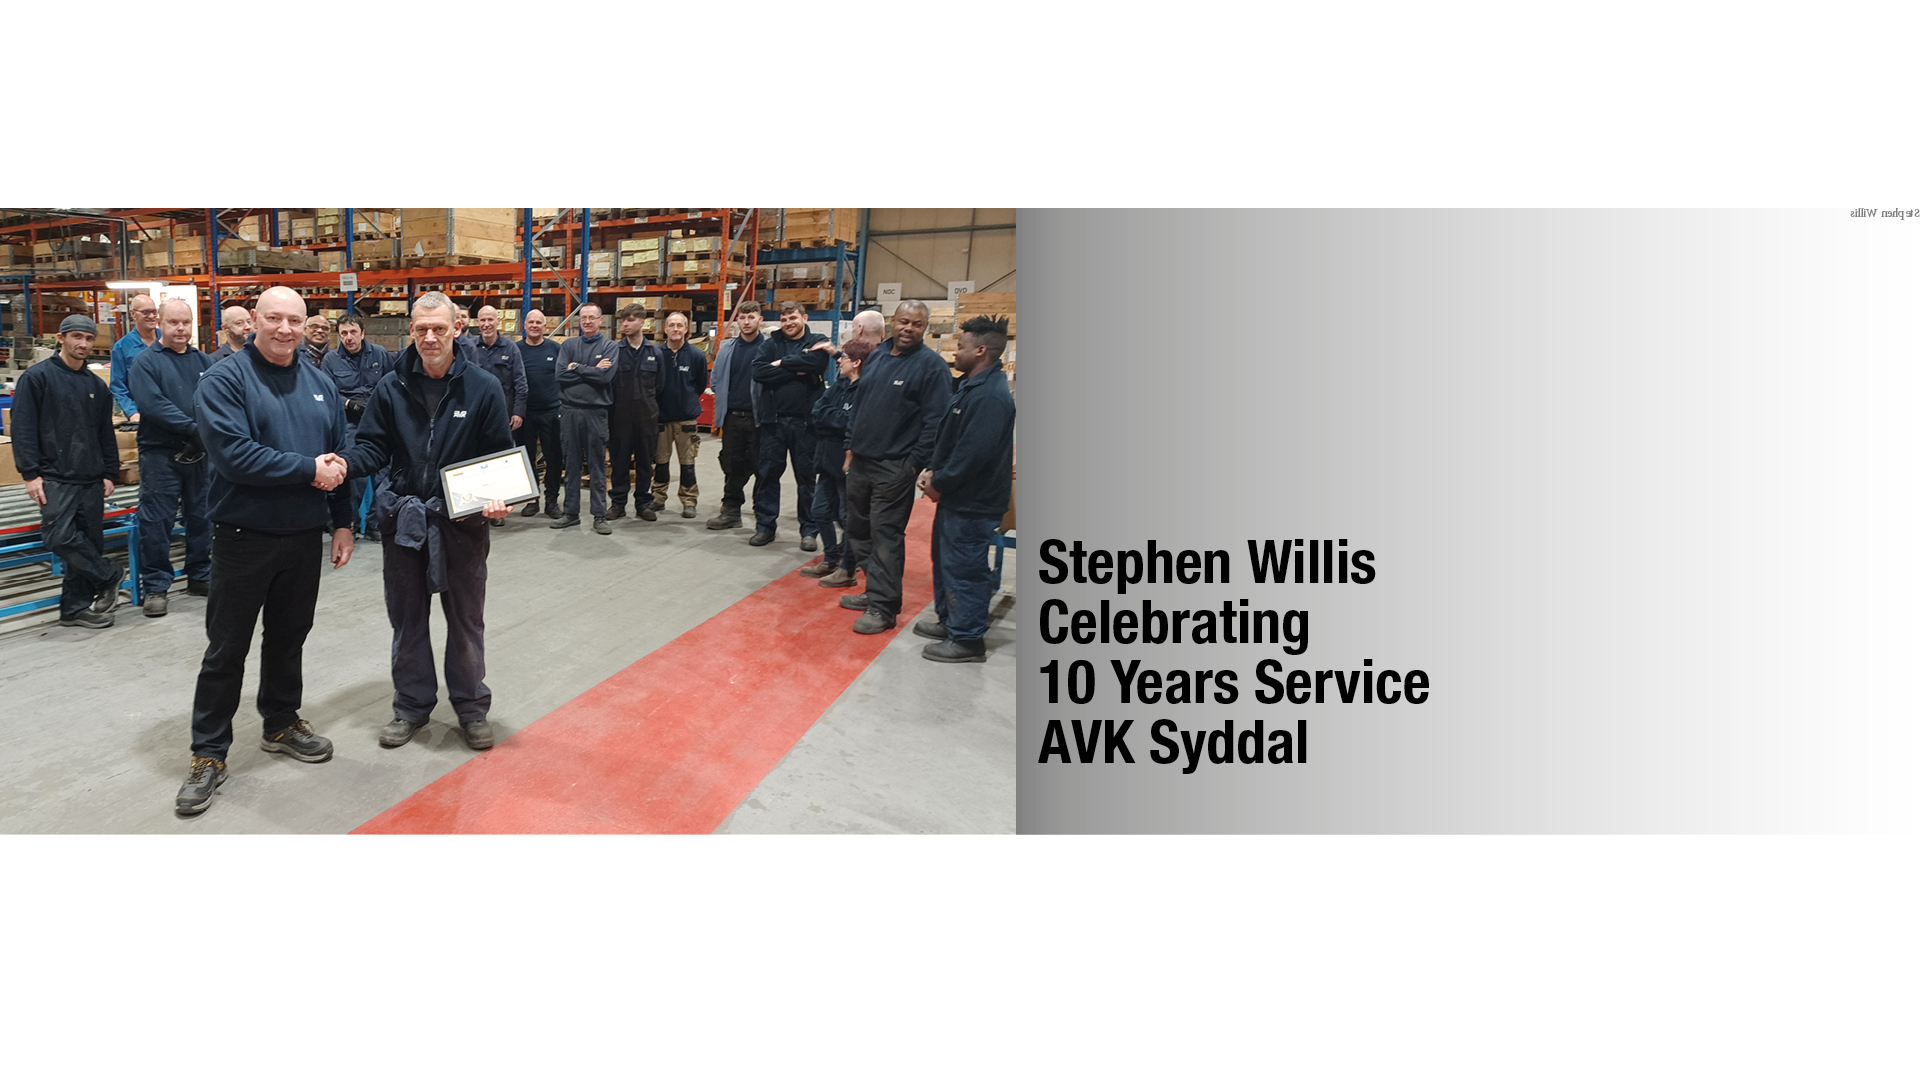 Stephen Willis of AVK Syddal celebrates 10 years service